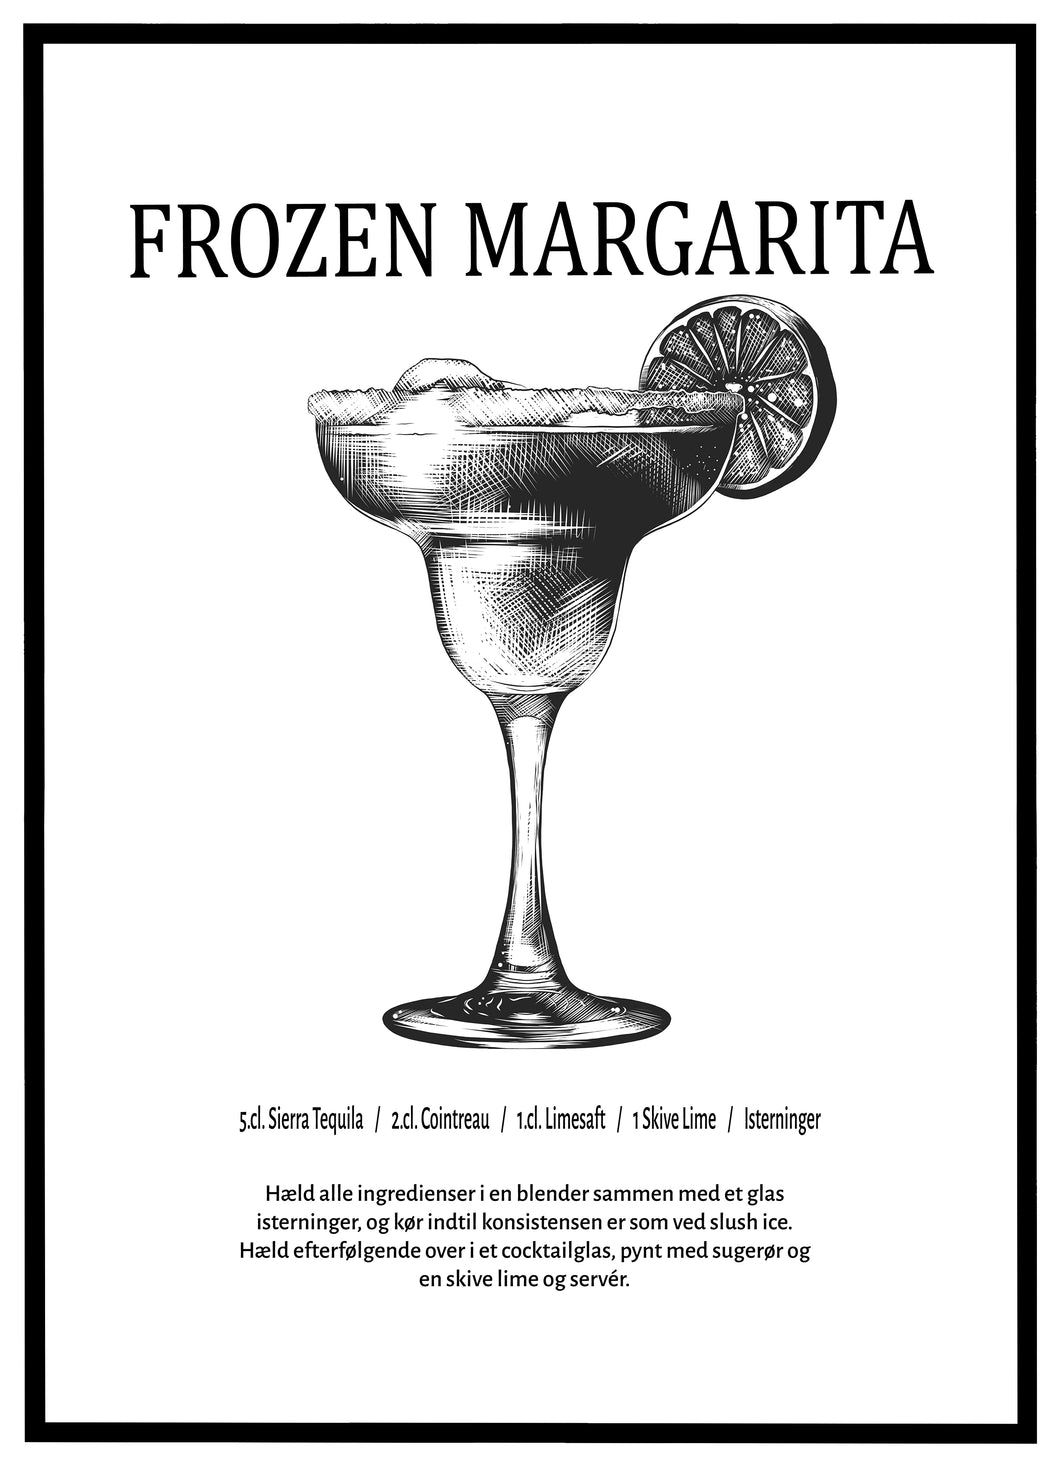 Frozen Margarita - Plakat